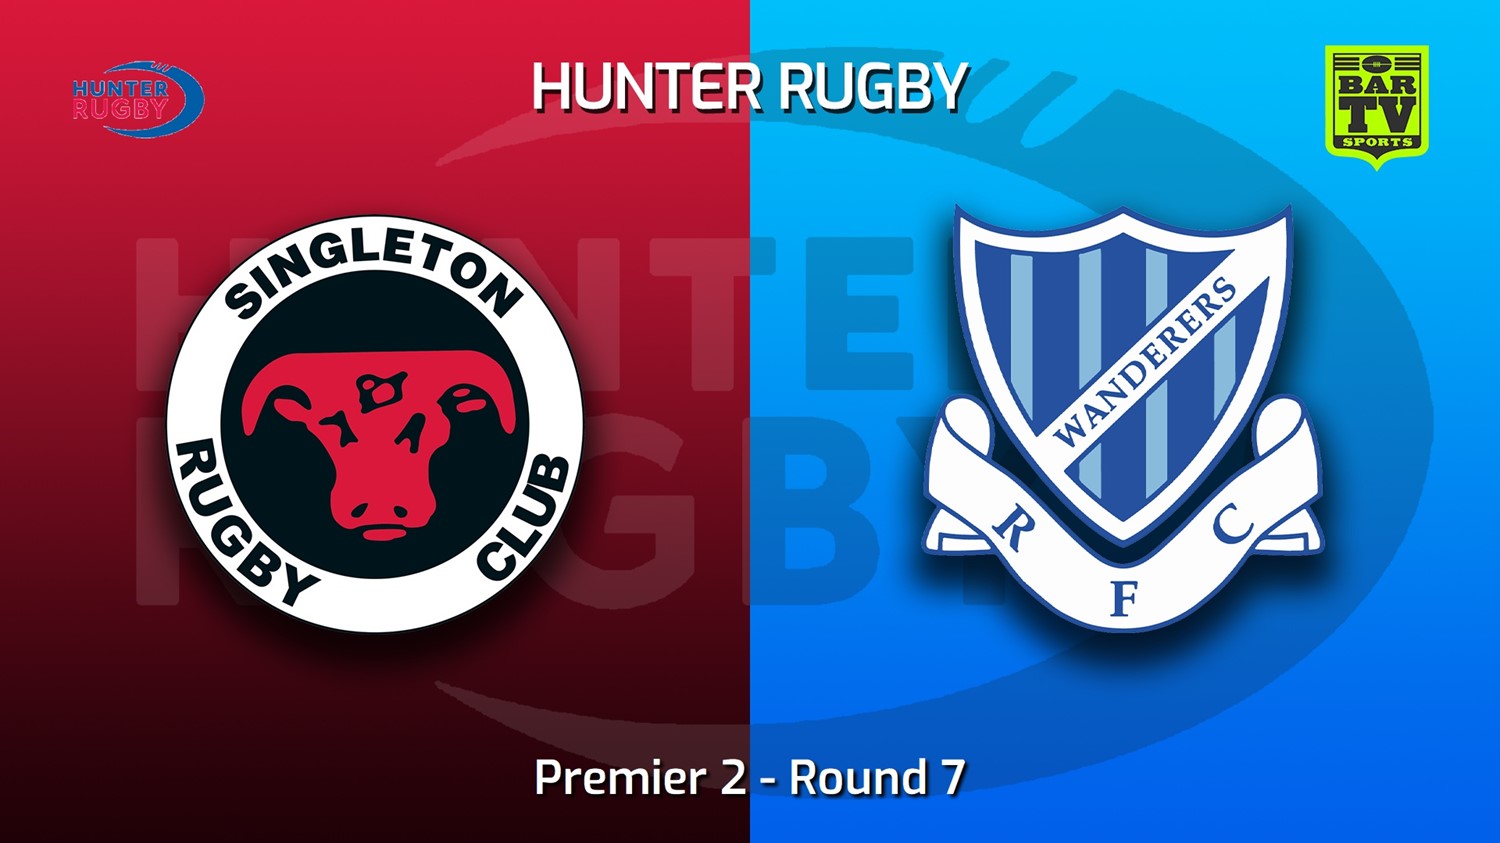 220621-Hunter Rugby Round 7 - Premier 2 - Singleton Bulls v Wanderers Slate Image